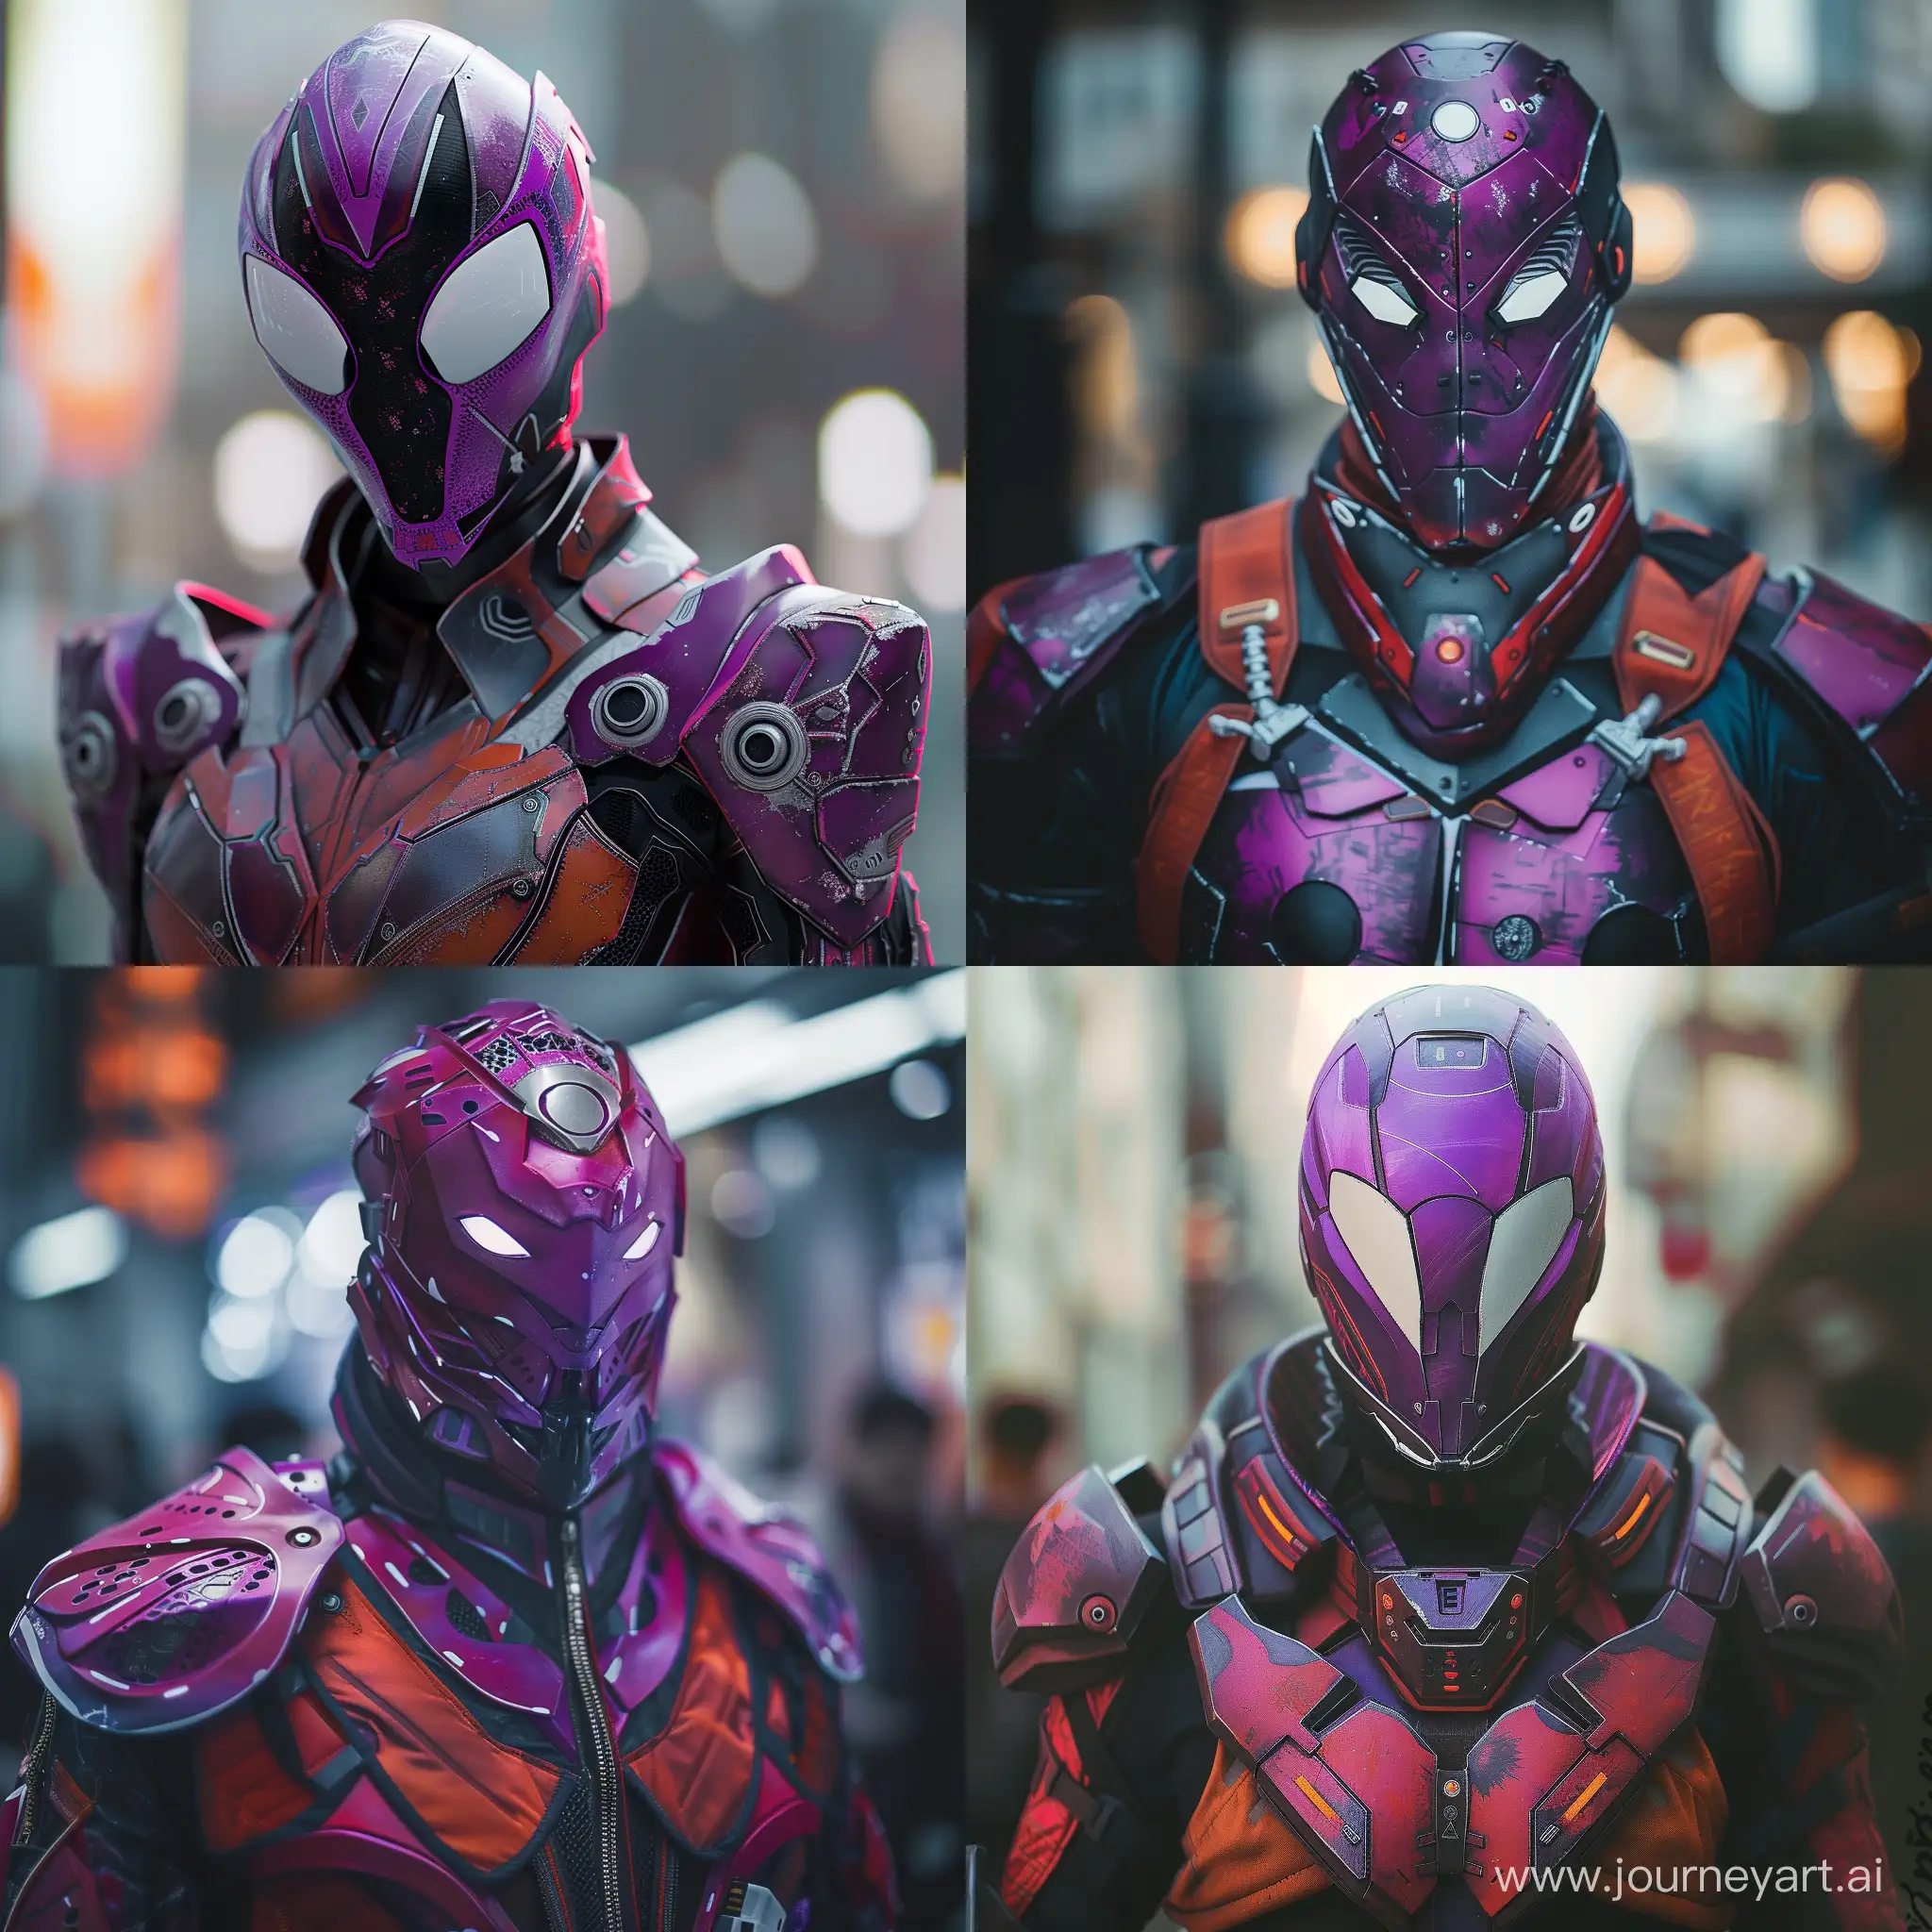 Futuristic-Superhero-in-Dynamic-Combat-Pose-HighTech-Purple-and-Red-Costume